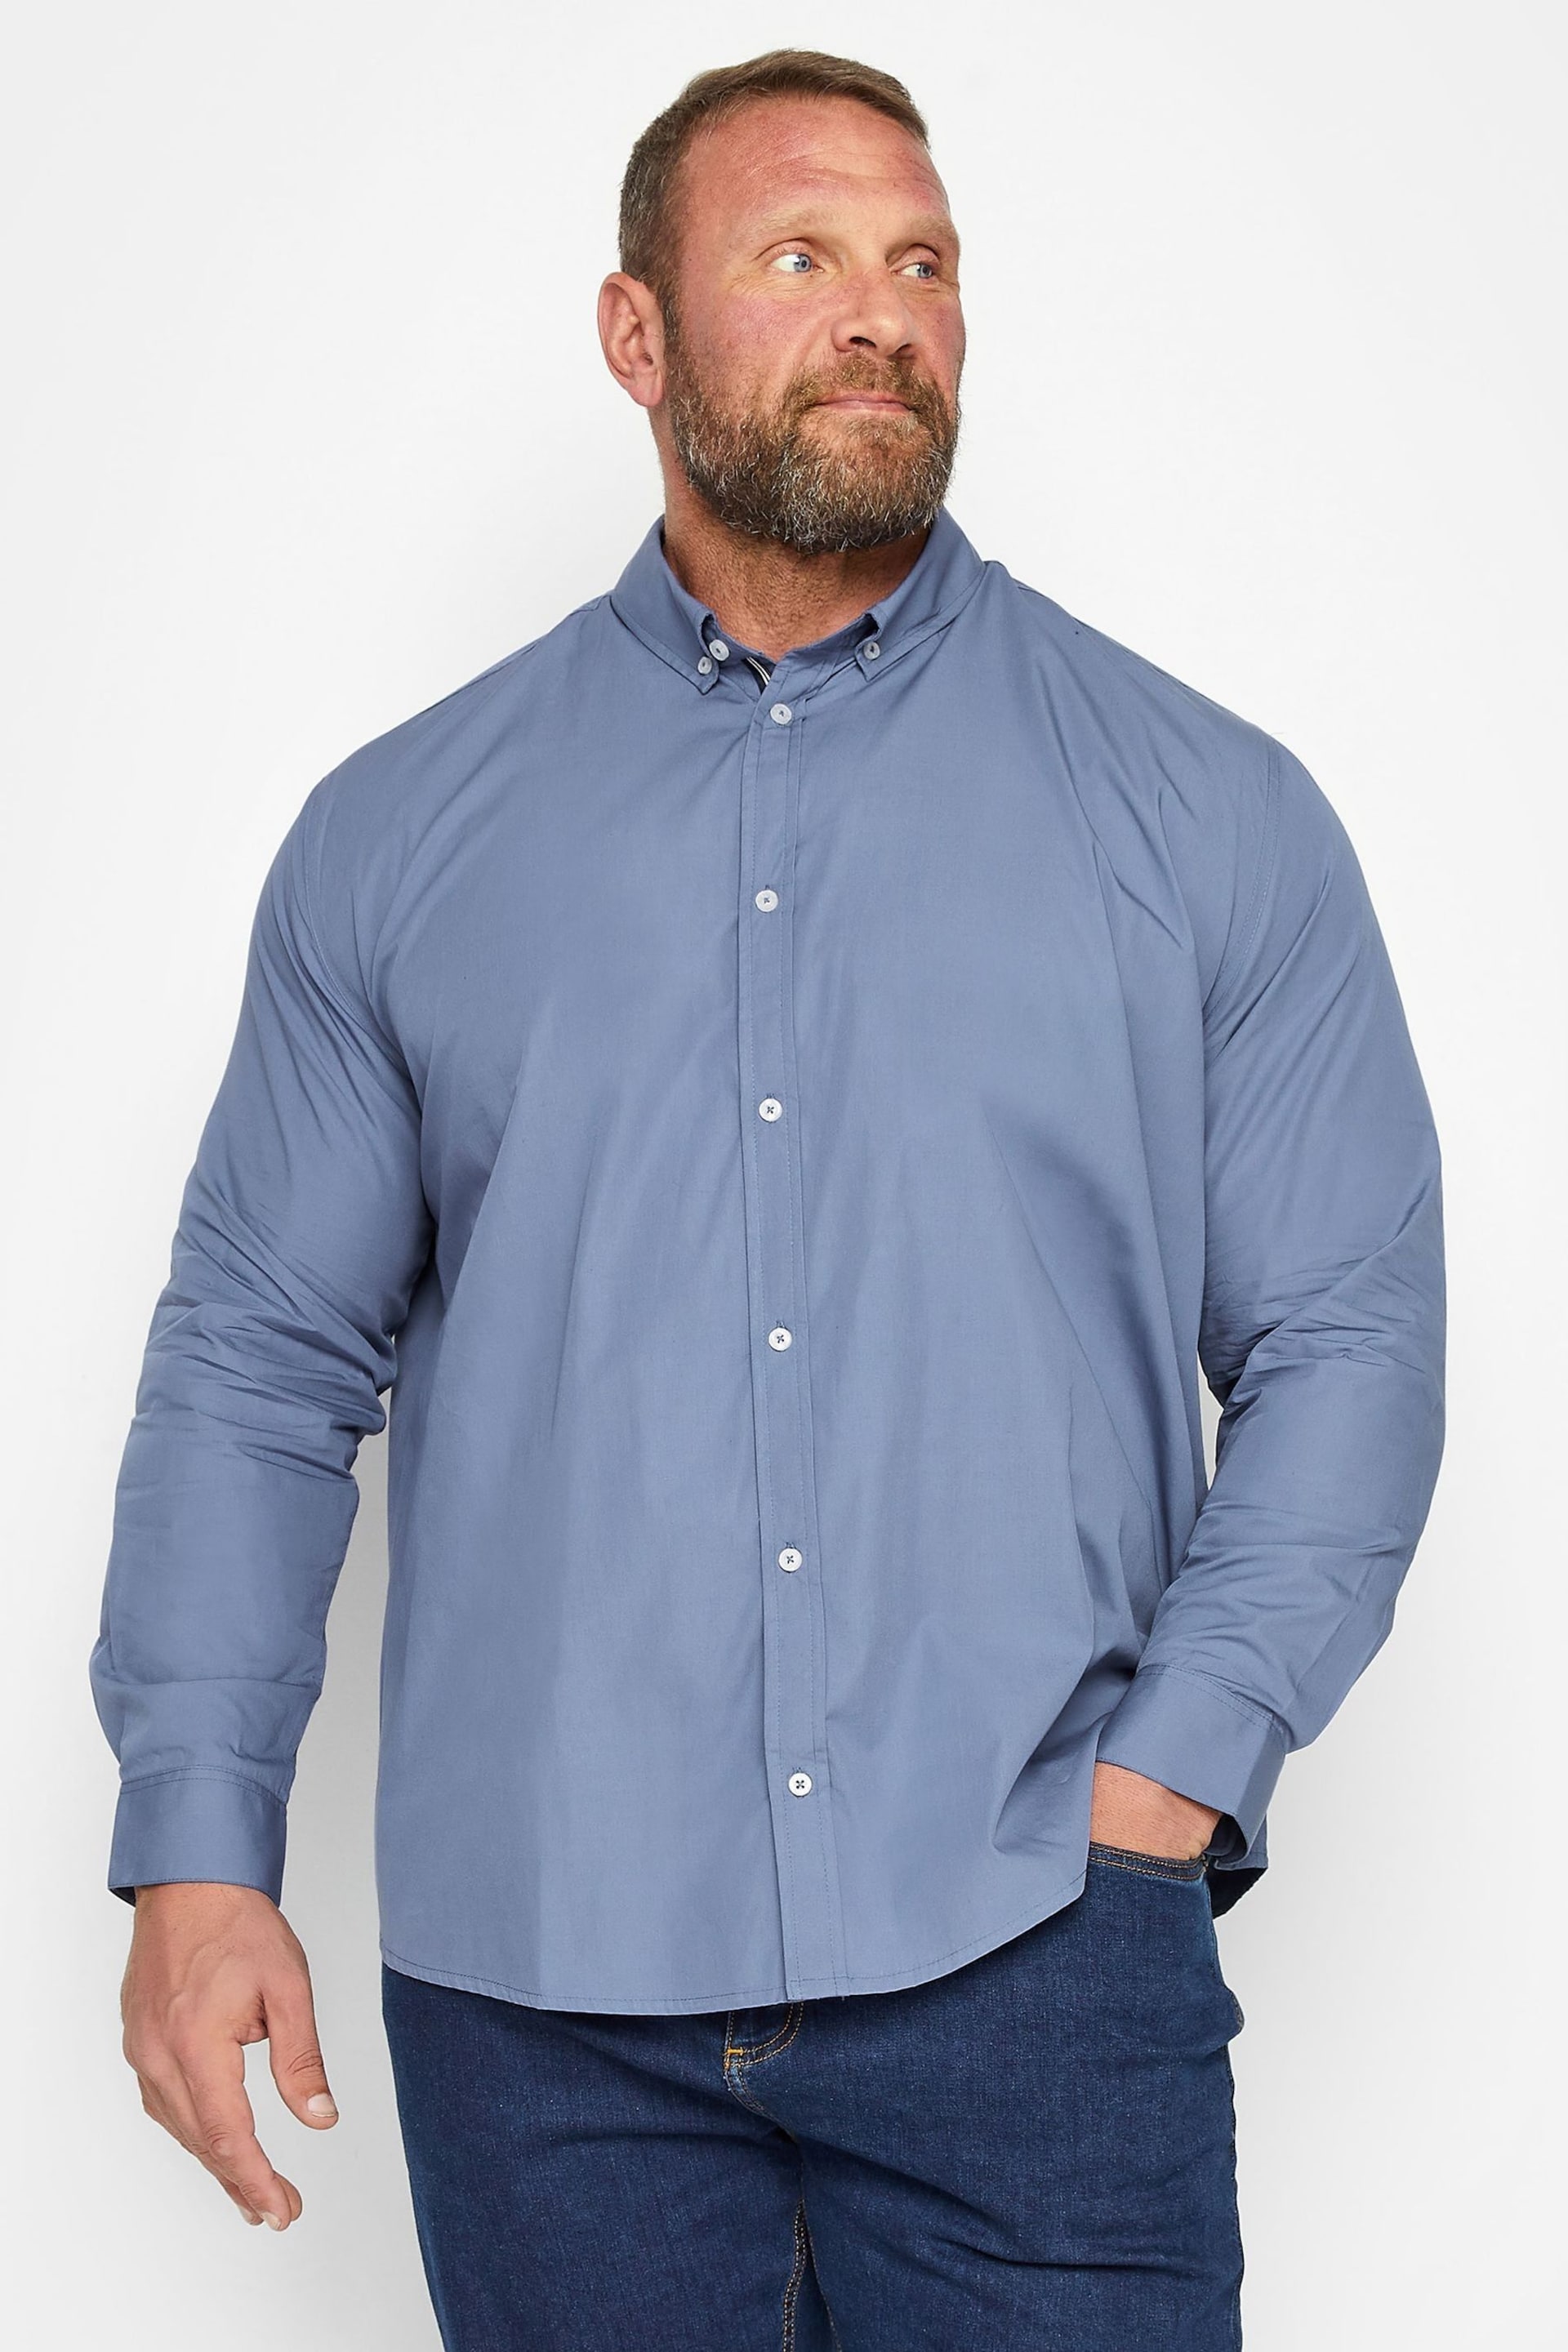 BadRhino Big & Tall Blue Long Sleeve Poplin Shirt - Image 1 of 3